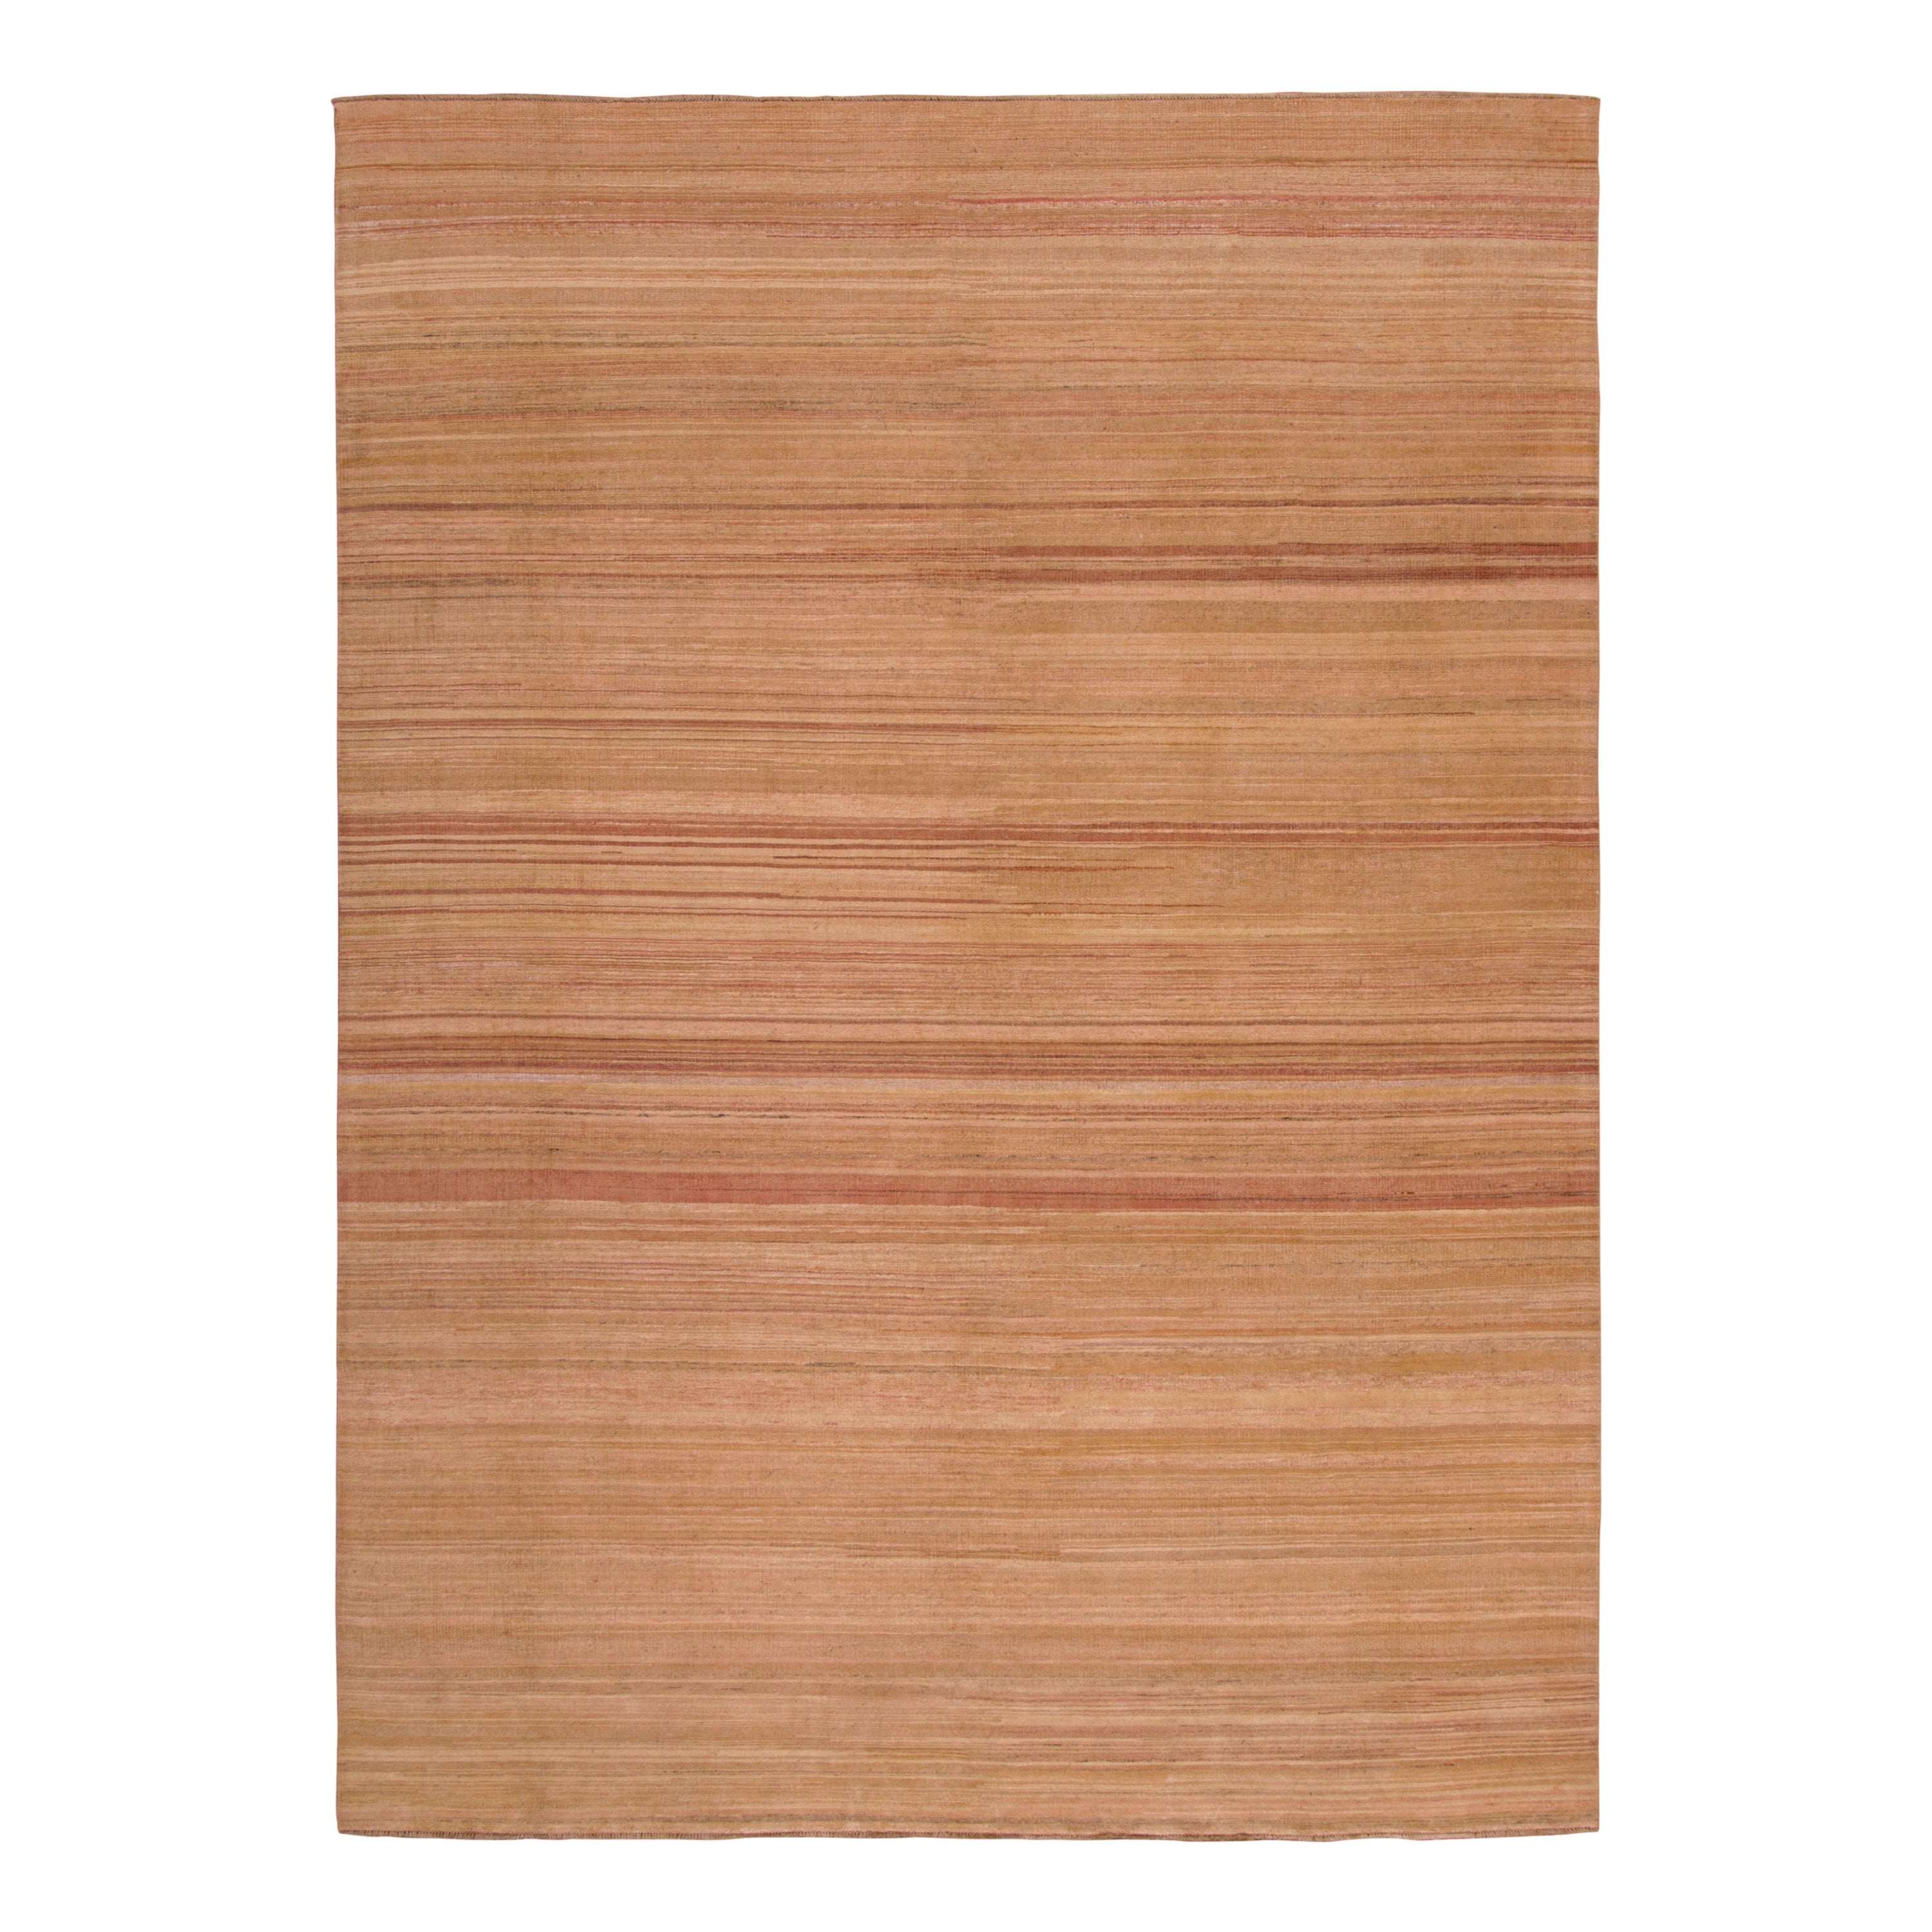 Rug & Kilim's Modern Modern Textural Rug in Beige-Brown and Red (tapis à texture moderne en beige, marron et rouge) 